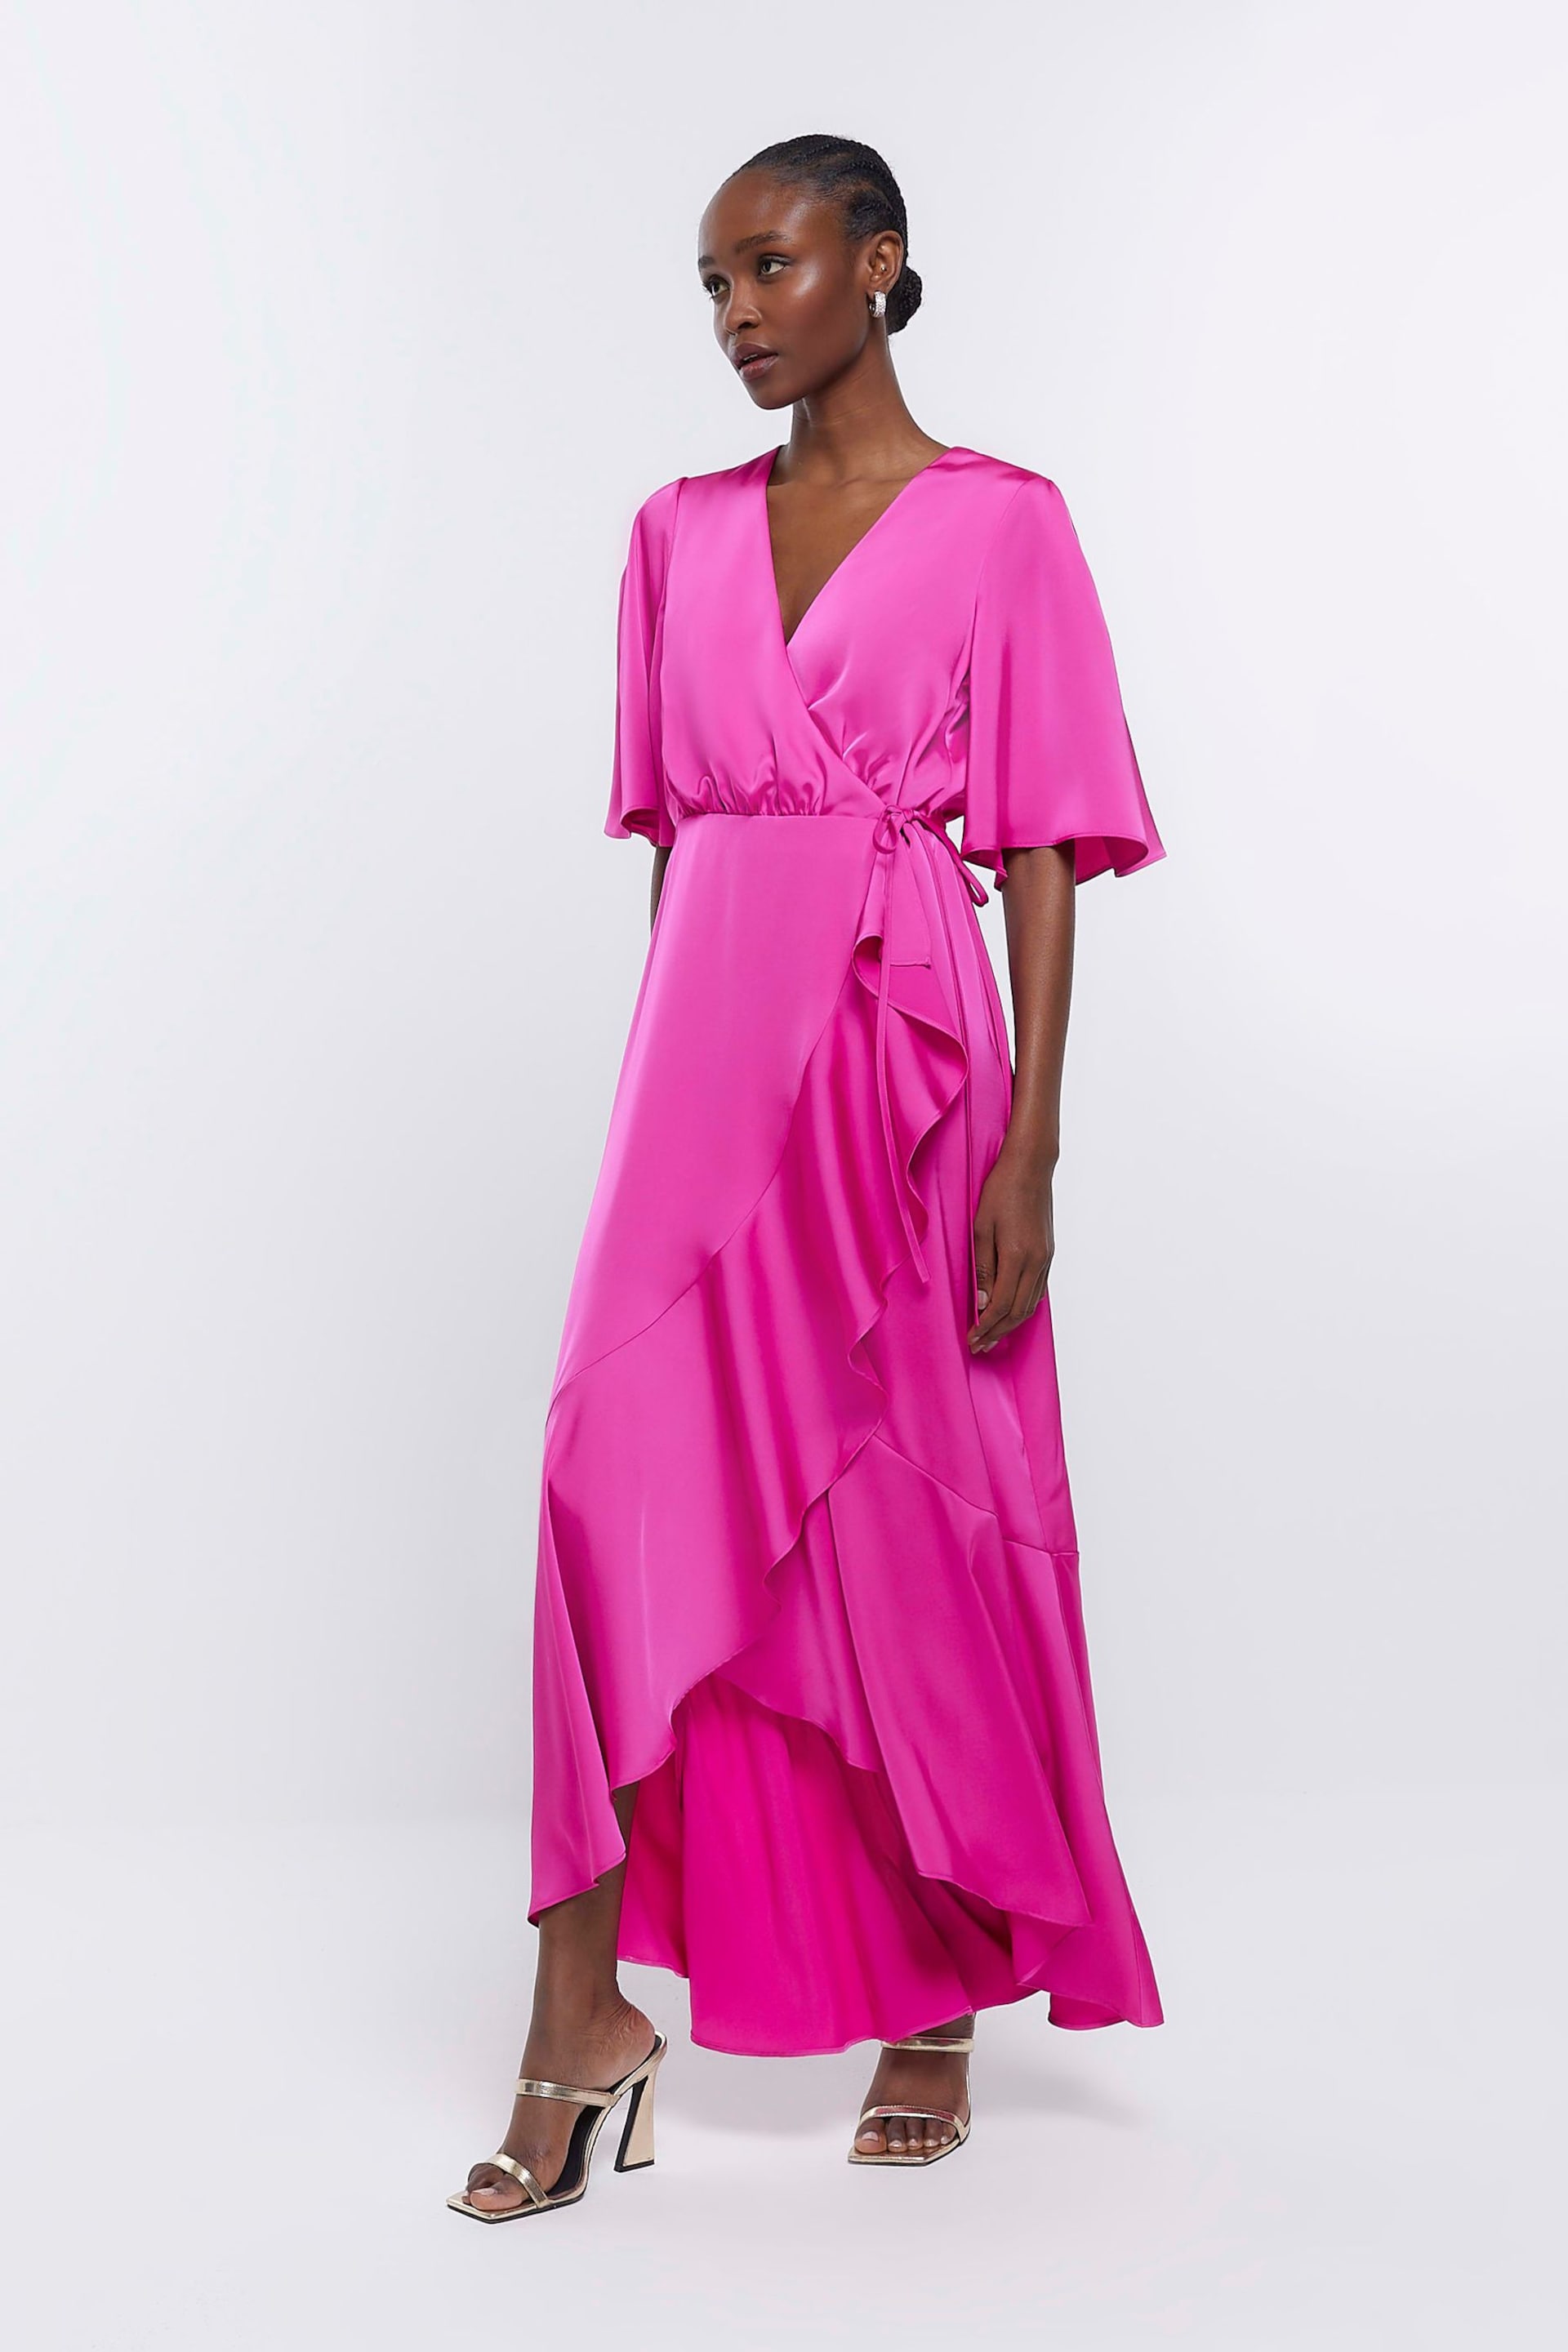 River Island Pink Waterfall Wrap Bridesmaid Dress - Image 4 of 5